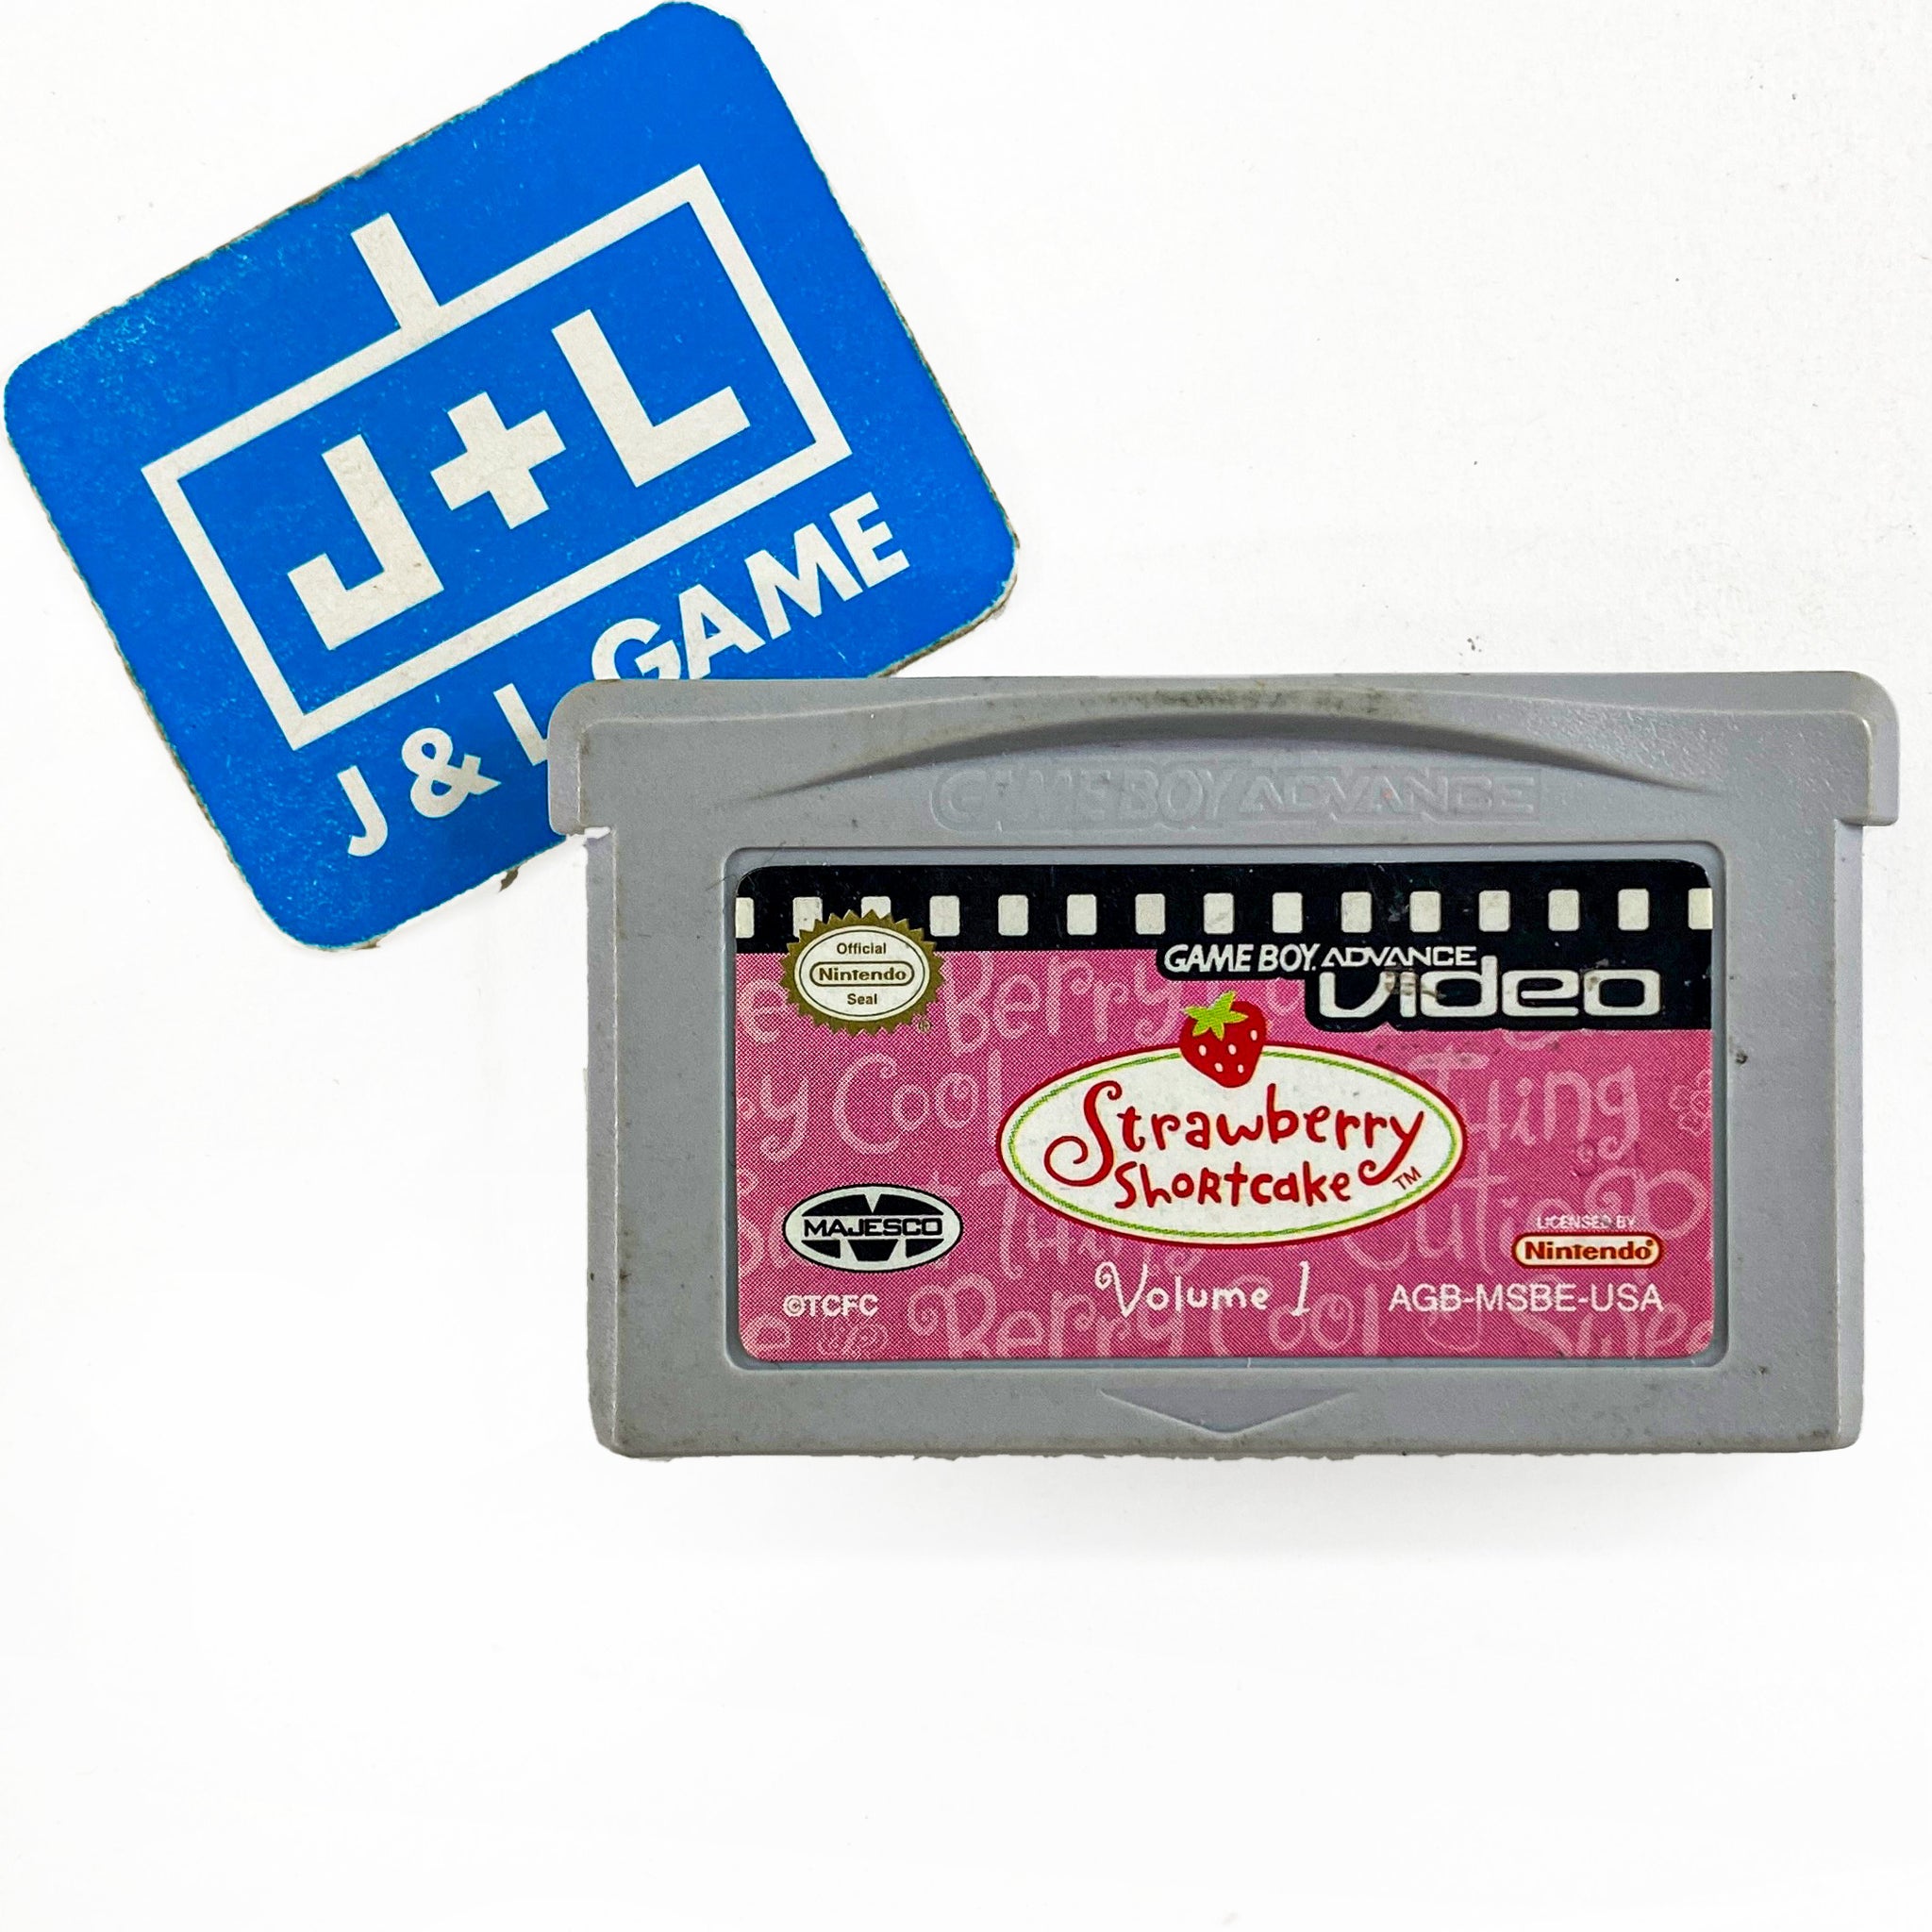 Game Boy Advance Video: Strawberry Shortcake - Volume 1 - (GBA) Game Boy Advance [Pre-Owned] Video Games Majesco   